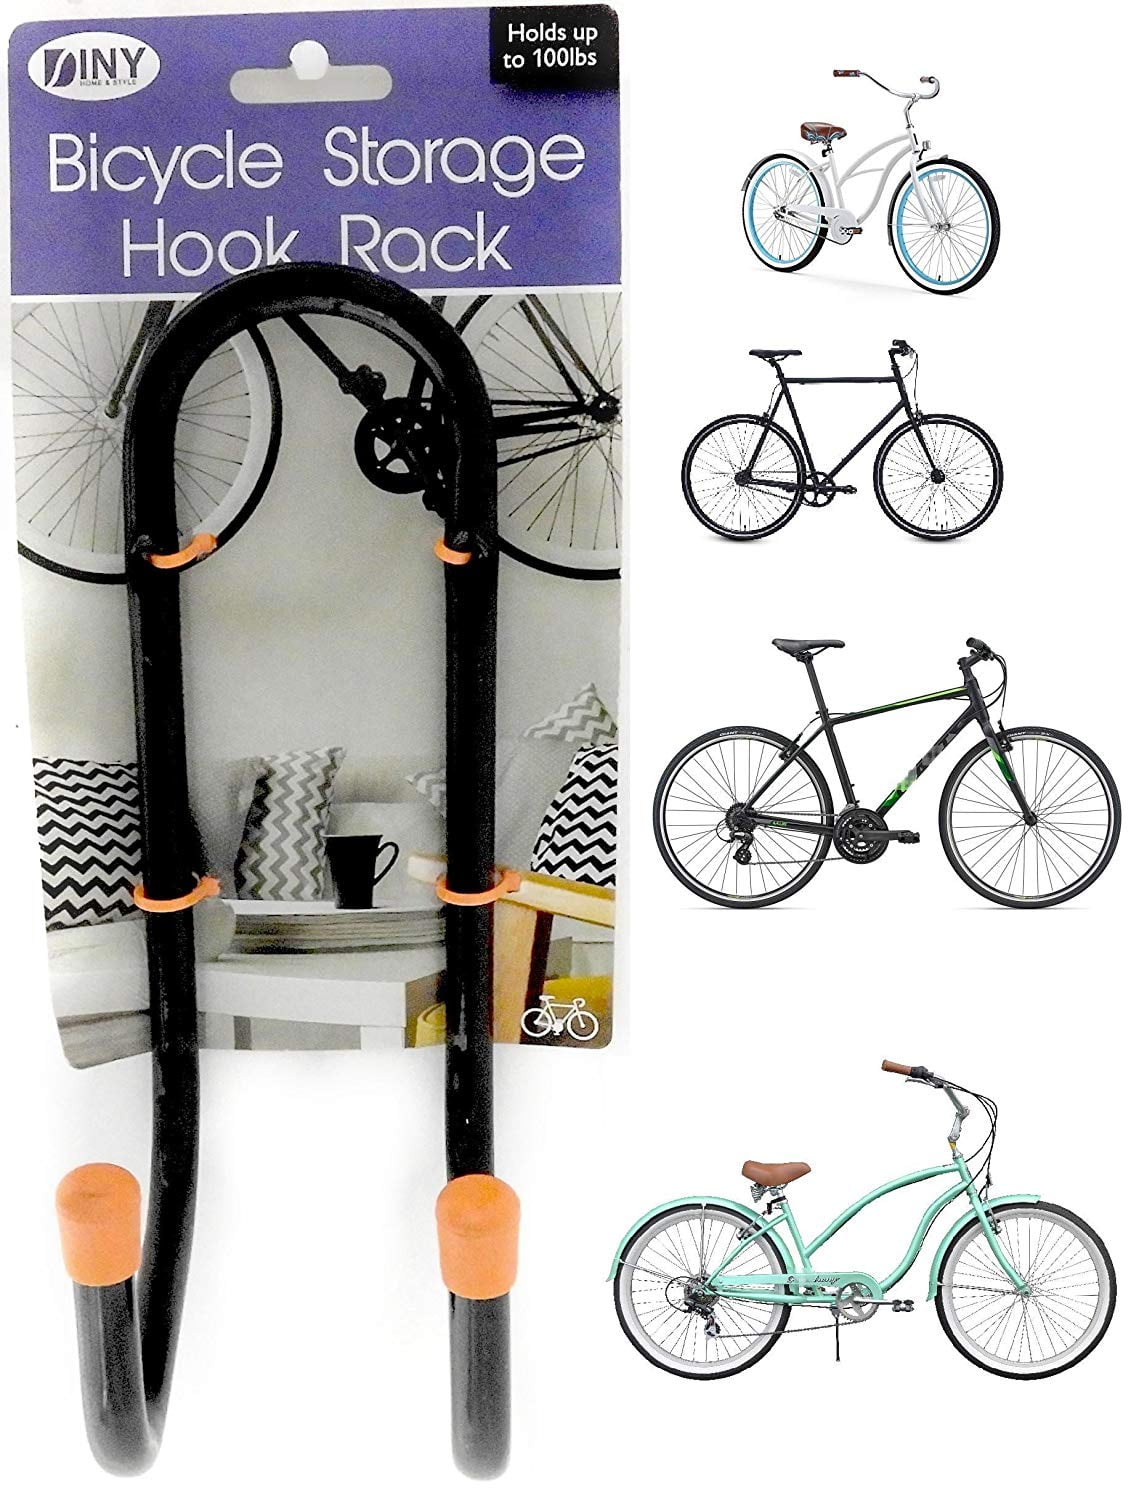 Wall Bike Hanger Sunlite Bicycle Storage Hooks 2-Pack Black Ceiling Holder